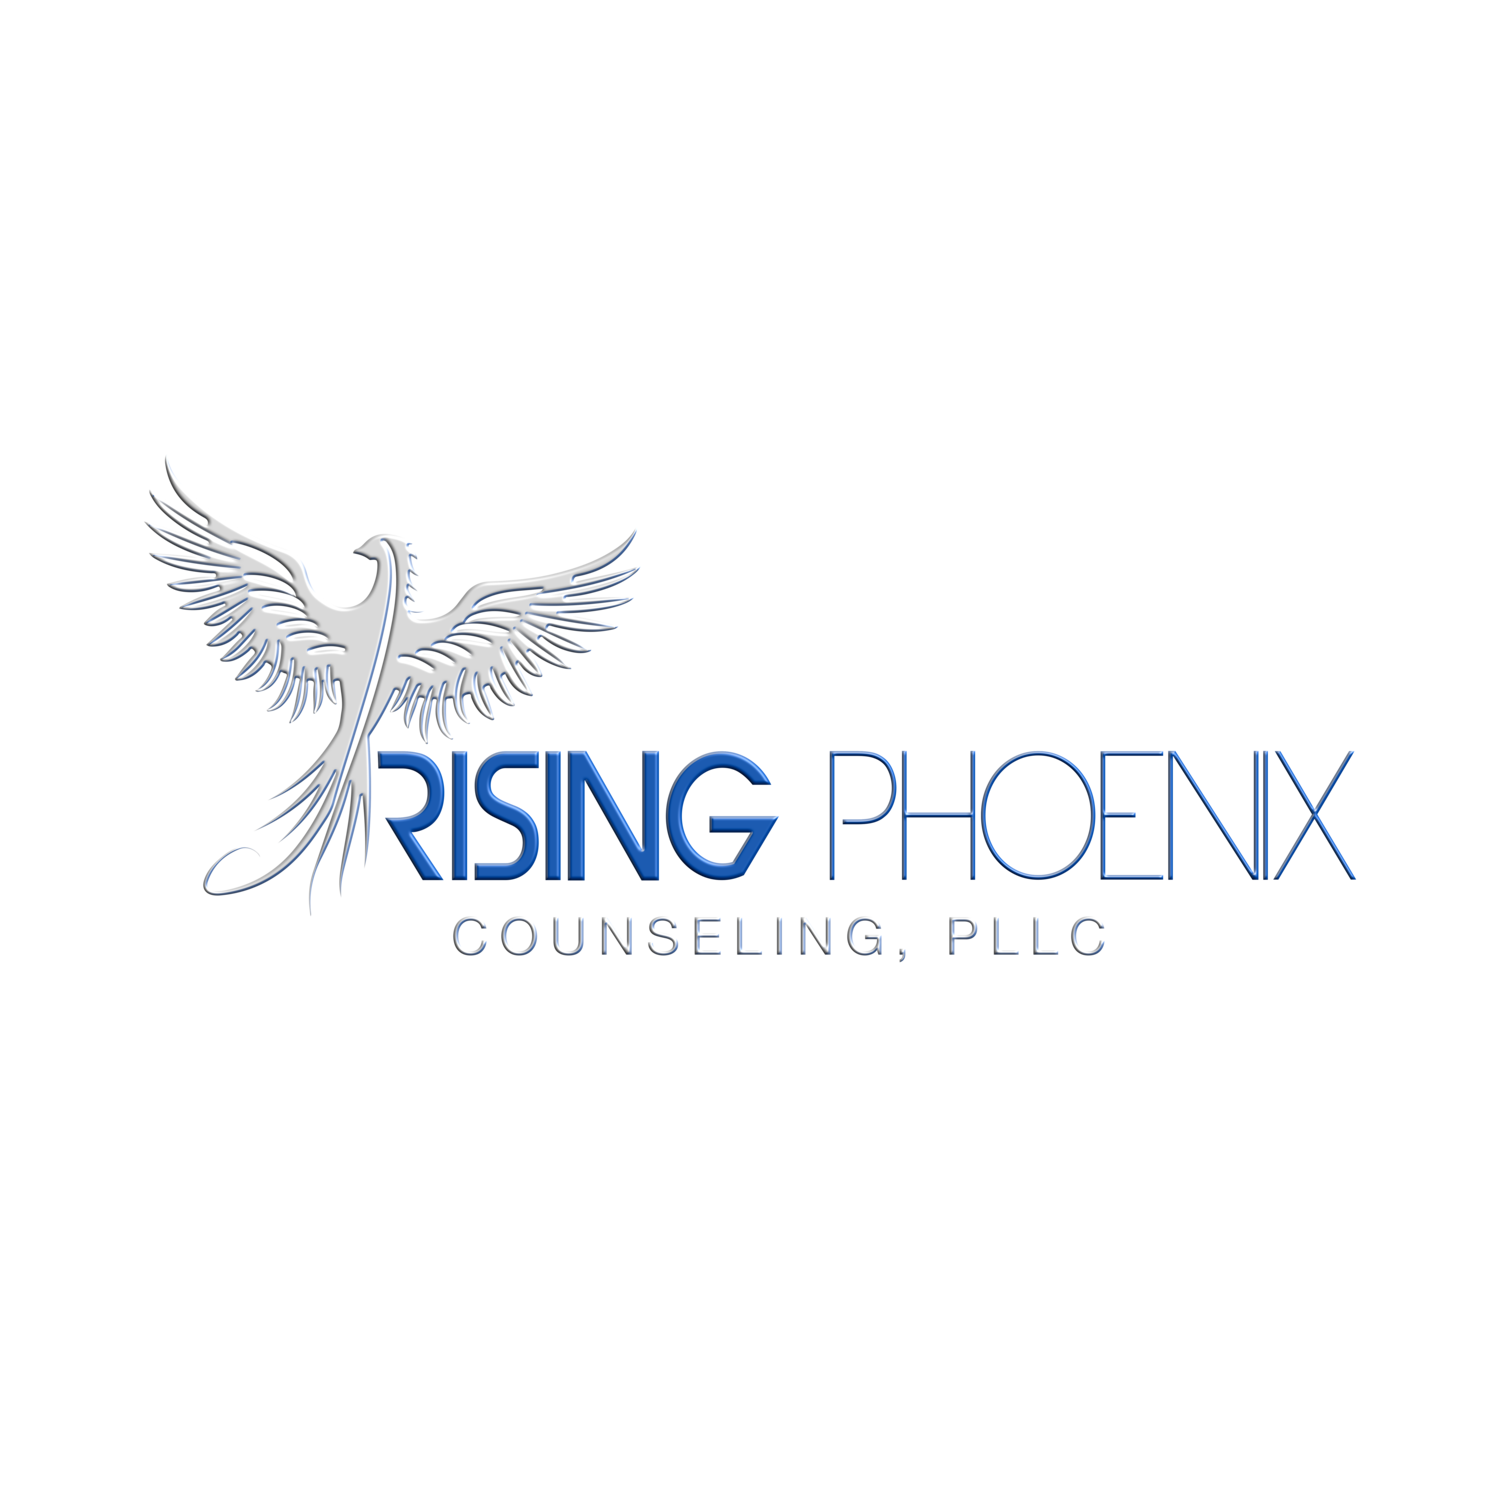 Rising Phoenix Counseling, PLLC